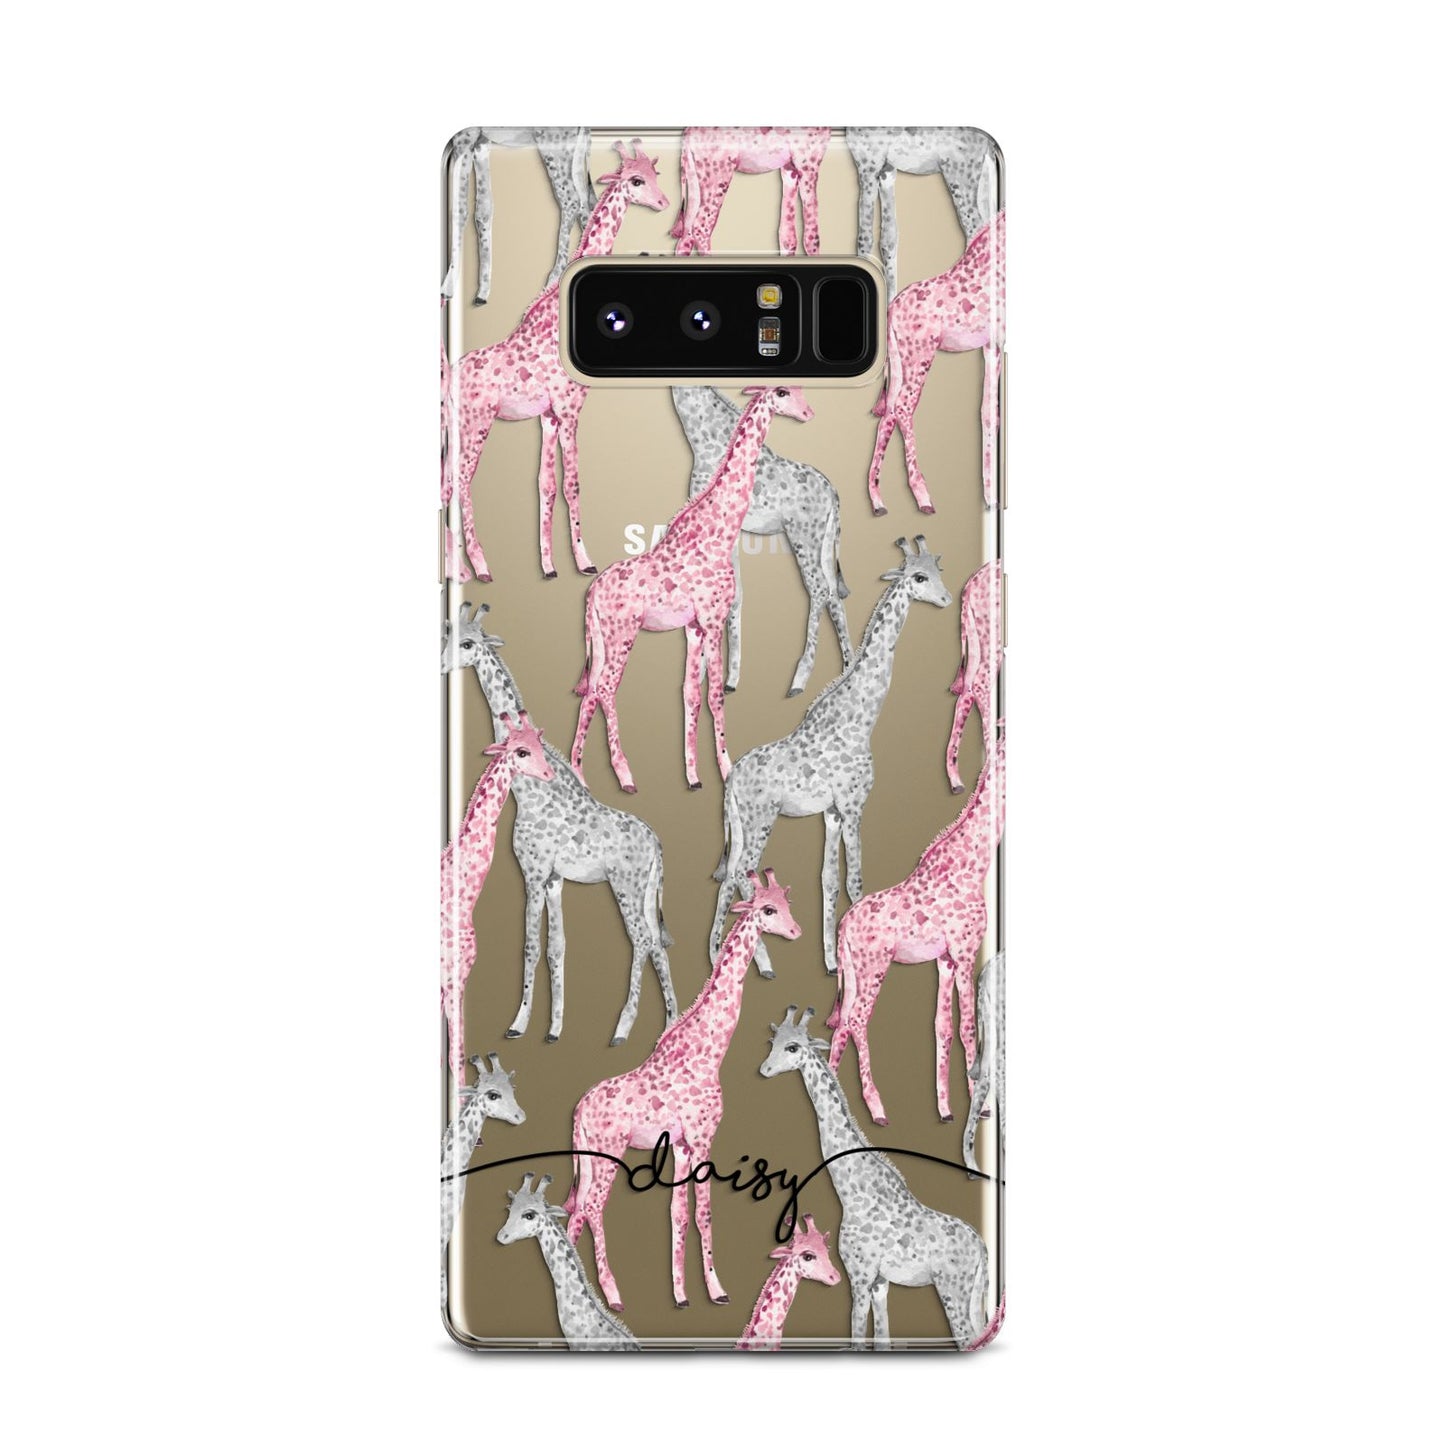 Personalised Pink Grey Giraffes Samsung Galaxy Note 8 Case